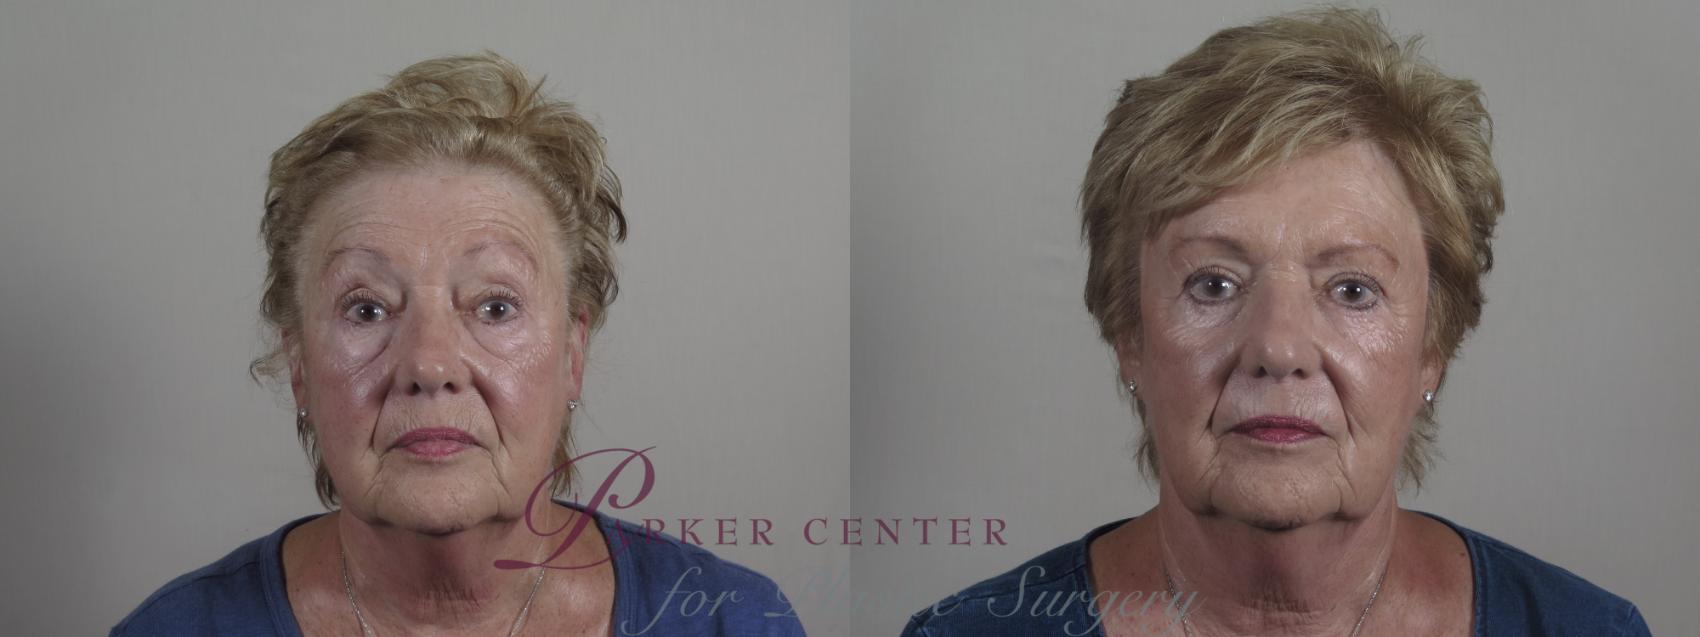 Eyelid Lift Case 1213 Before & After View #1  | Paramus, NJ | Parker Center for Plastic Surgery